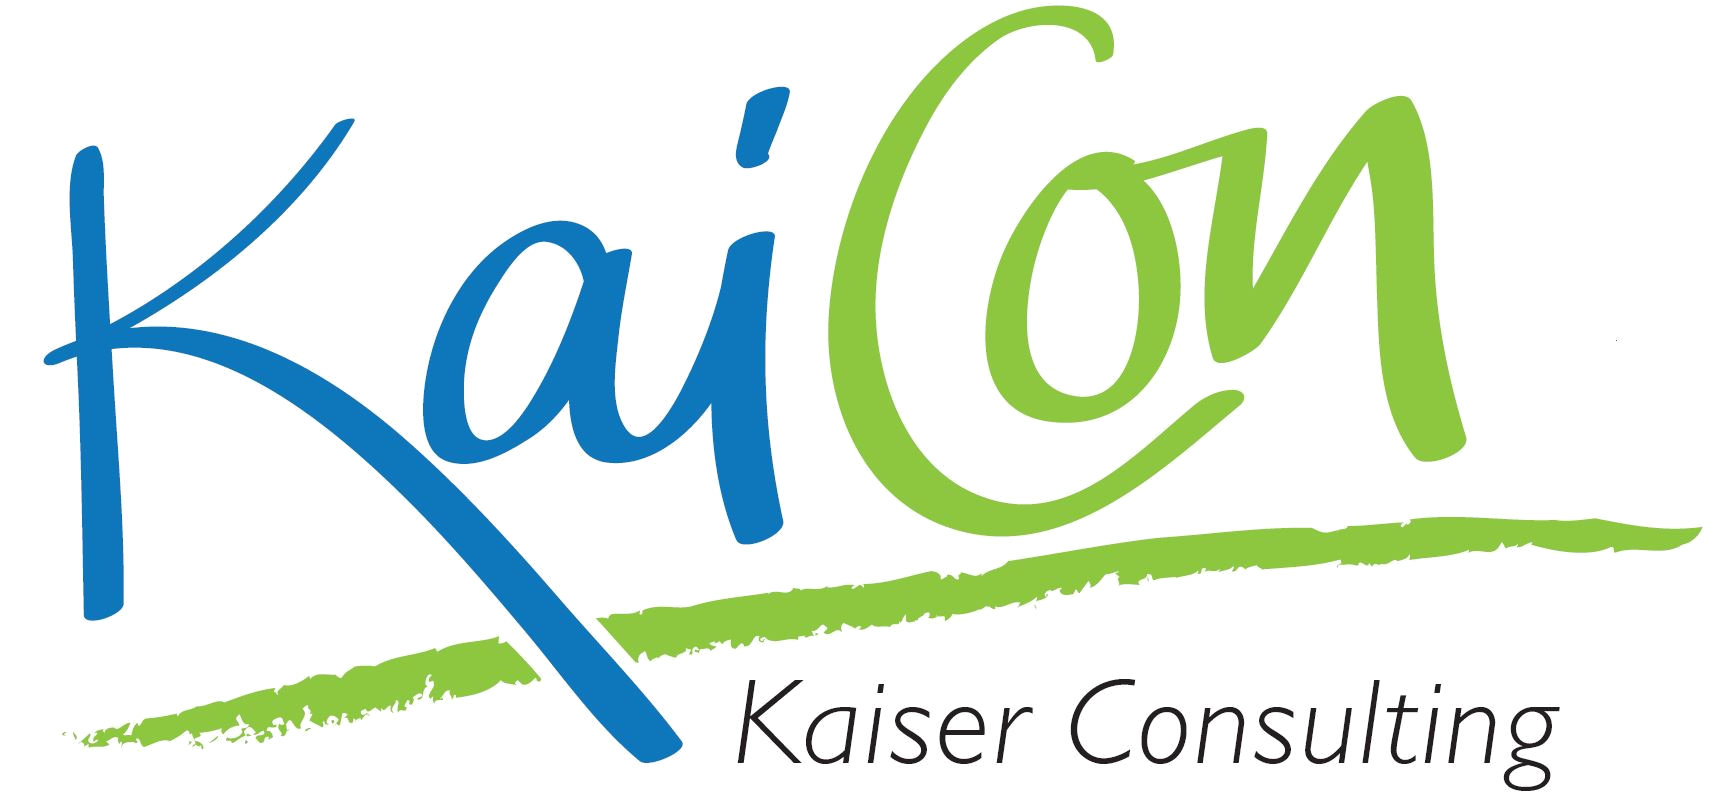 Logo kaicon